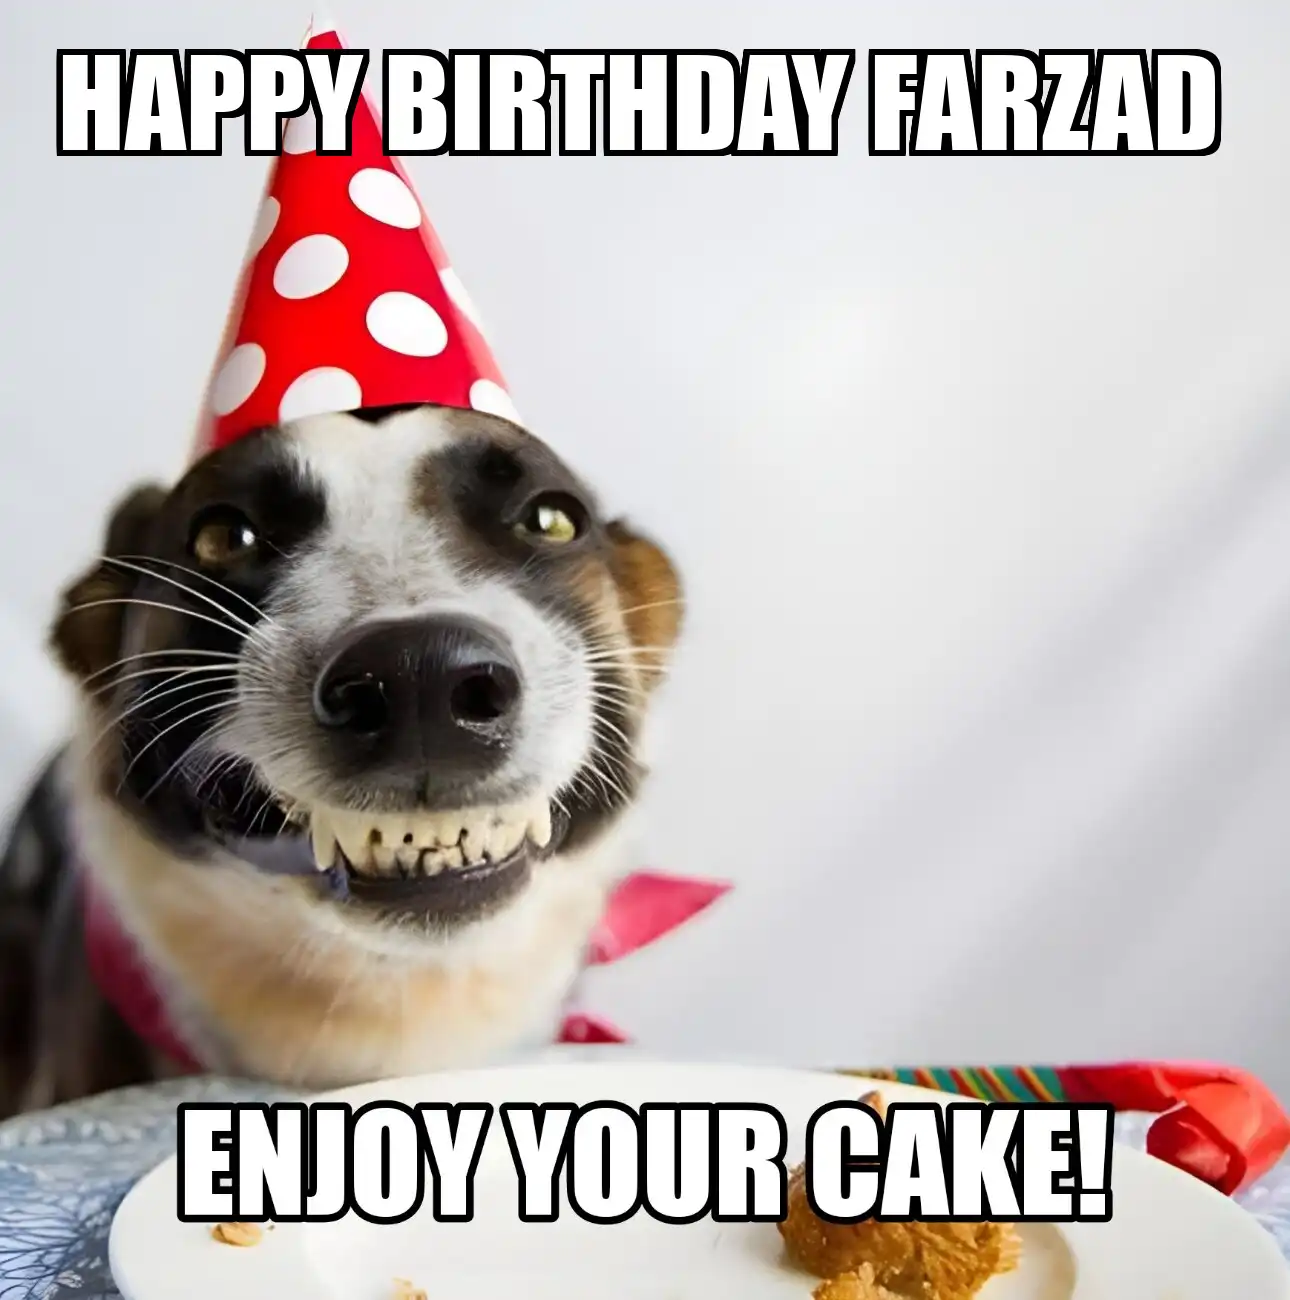 Happy Birthday Farzad Enjoy Your Cake Dog Meme